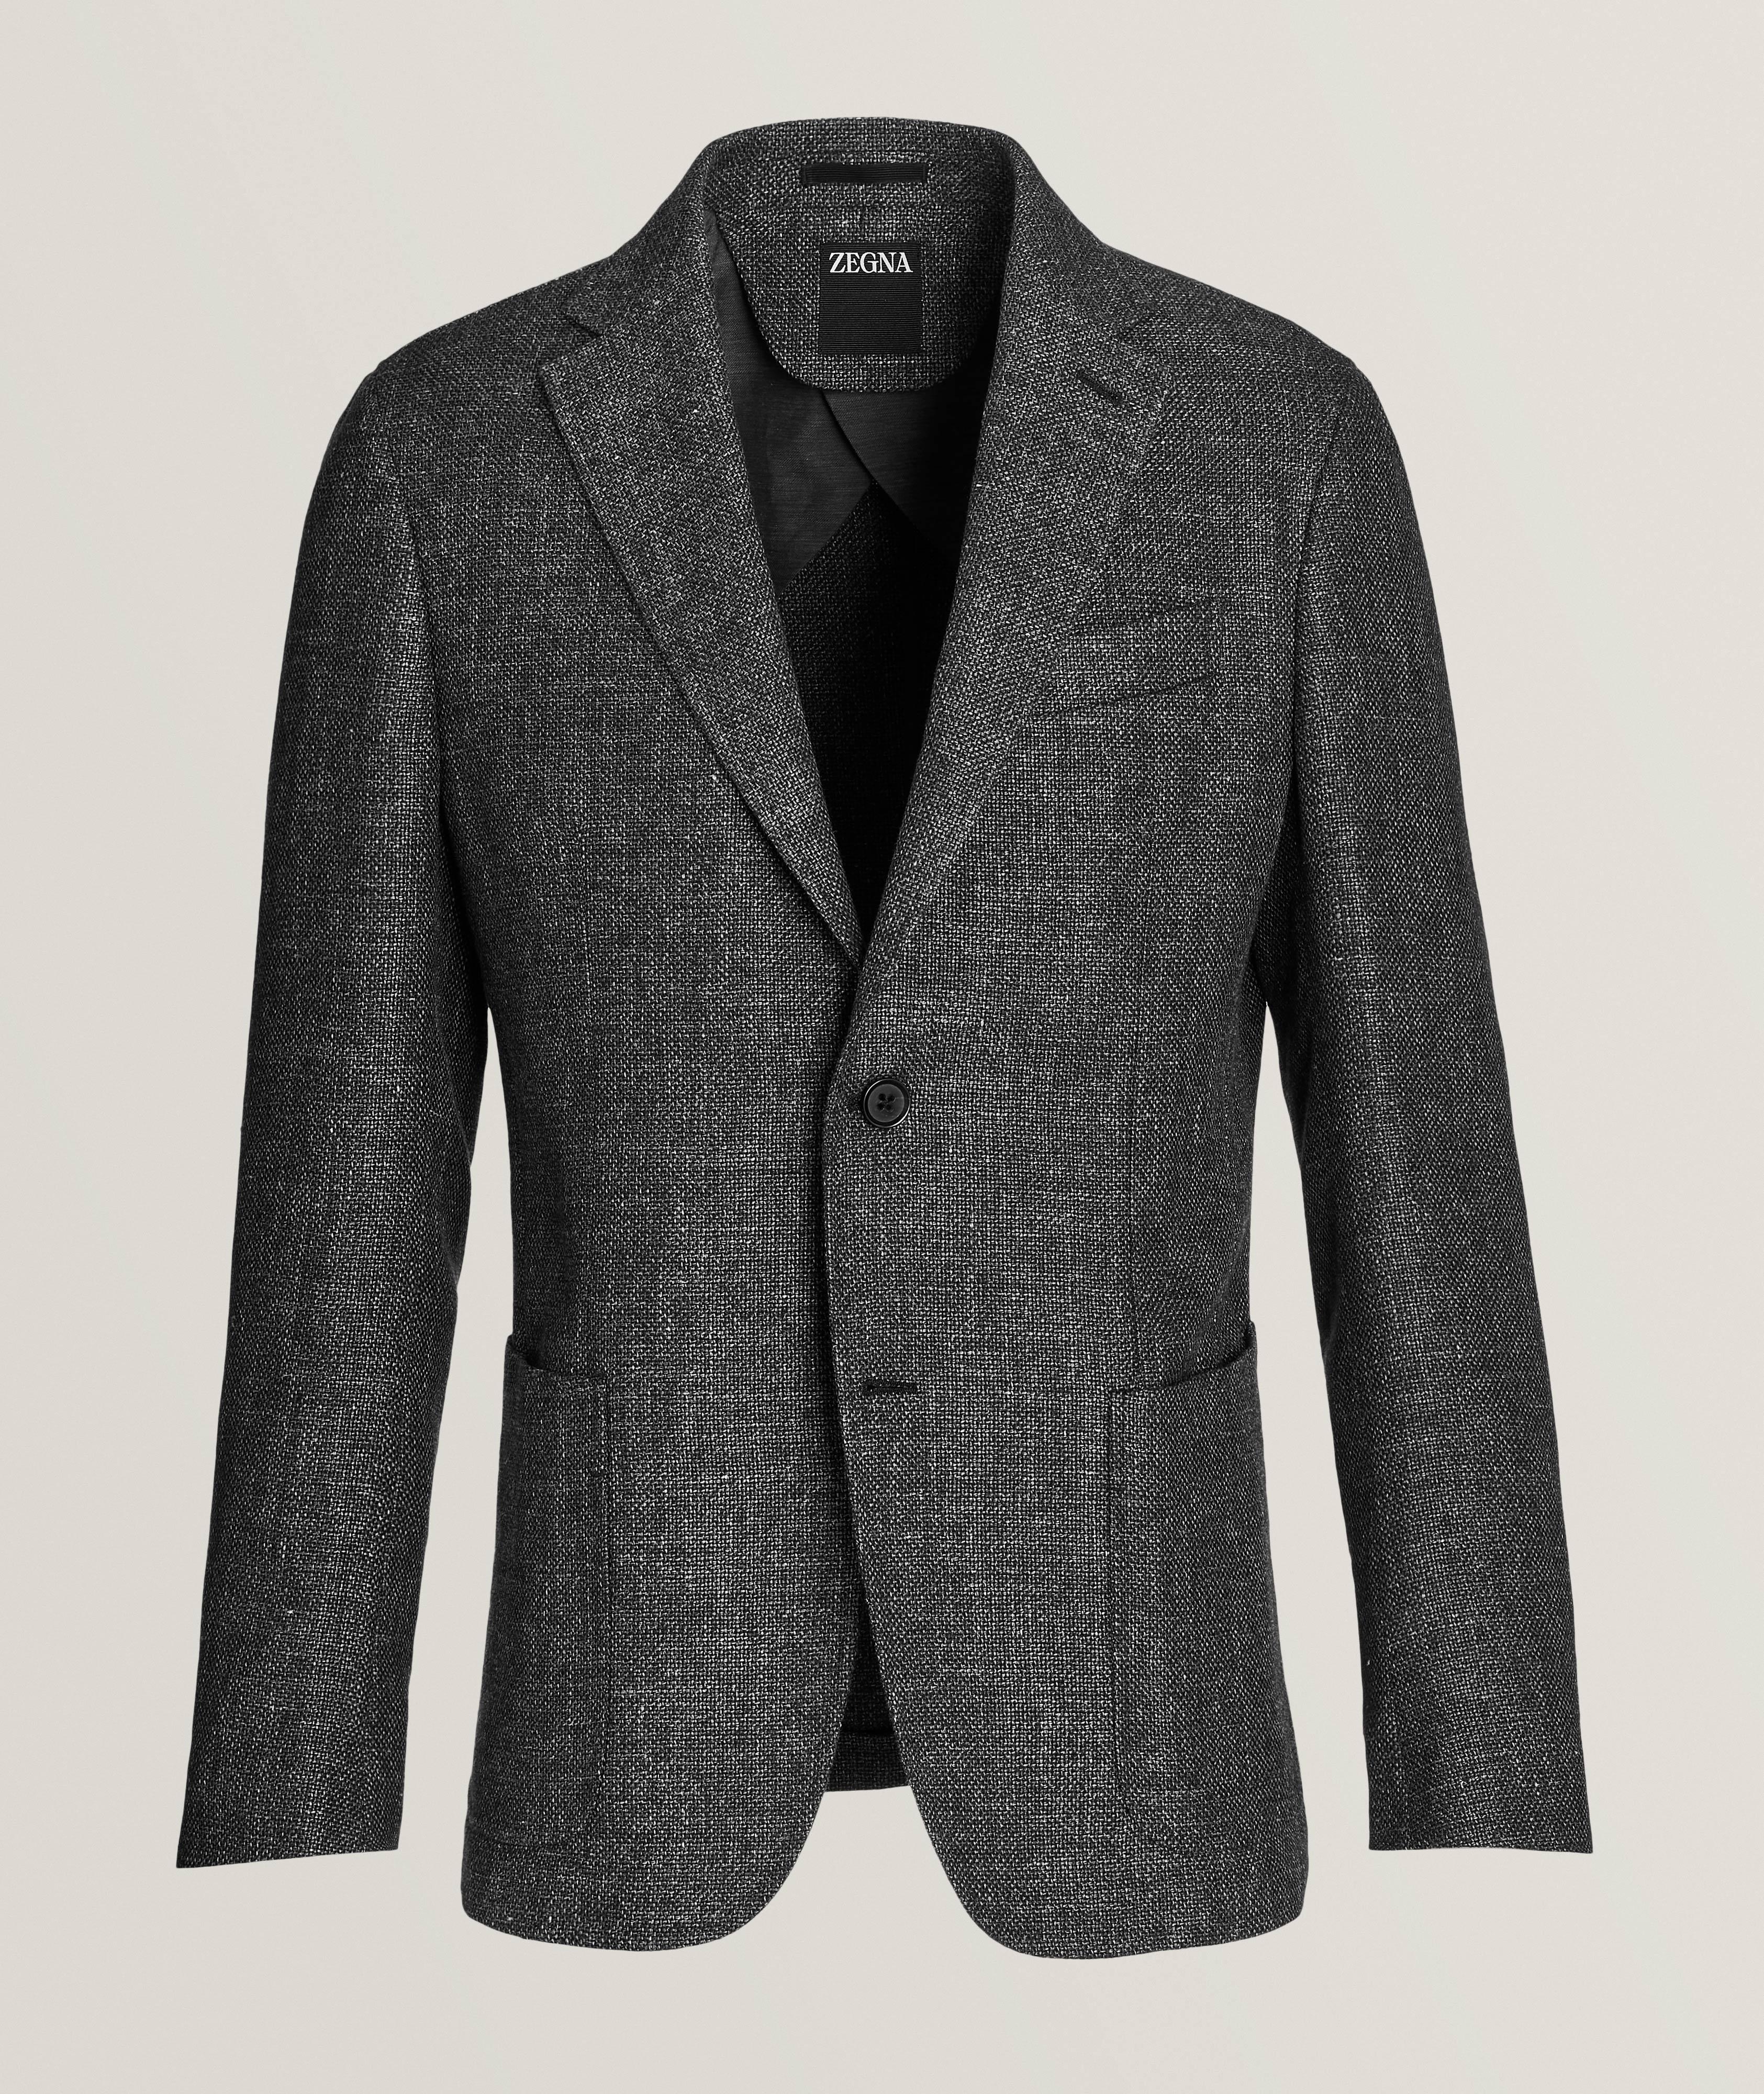 Textured Wool-Linen Sport Jacket image 0